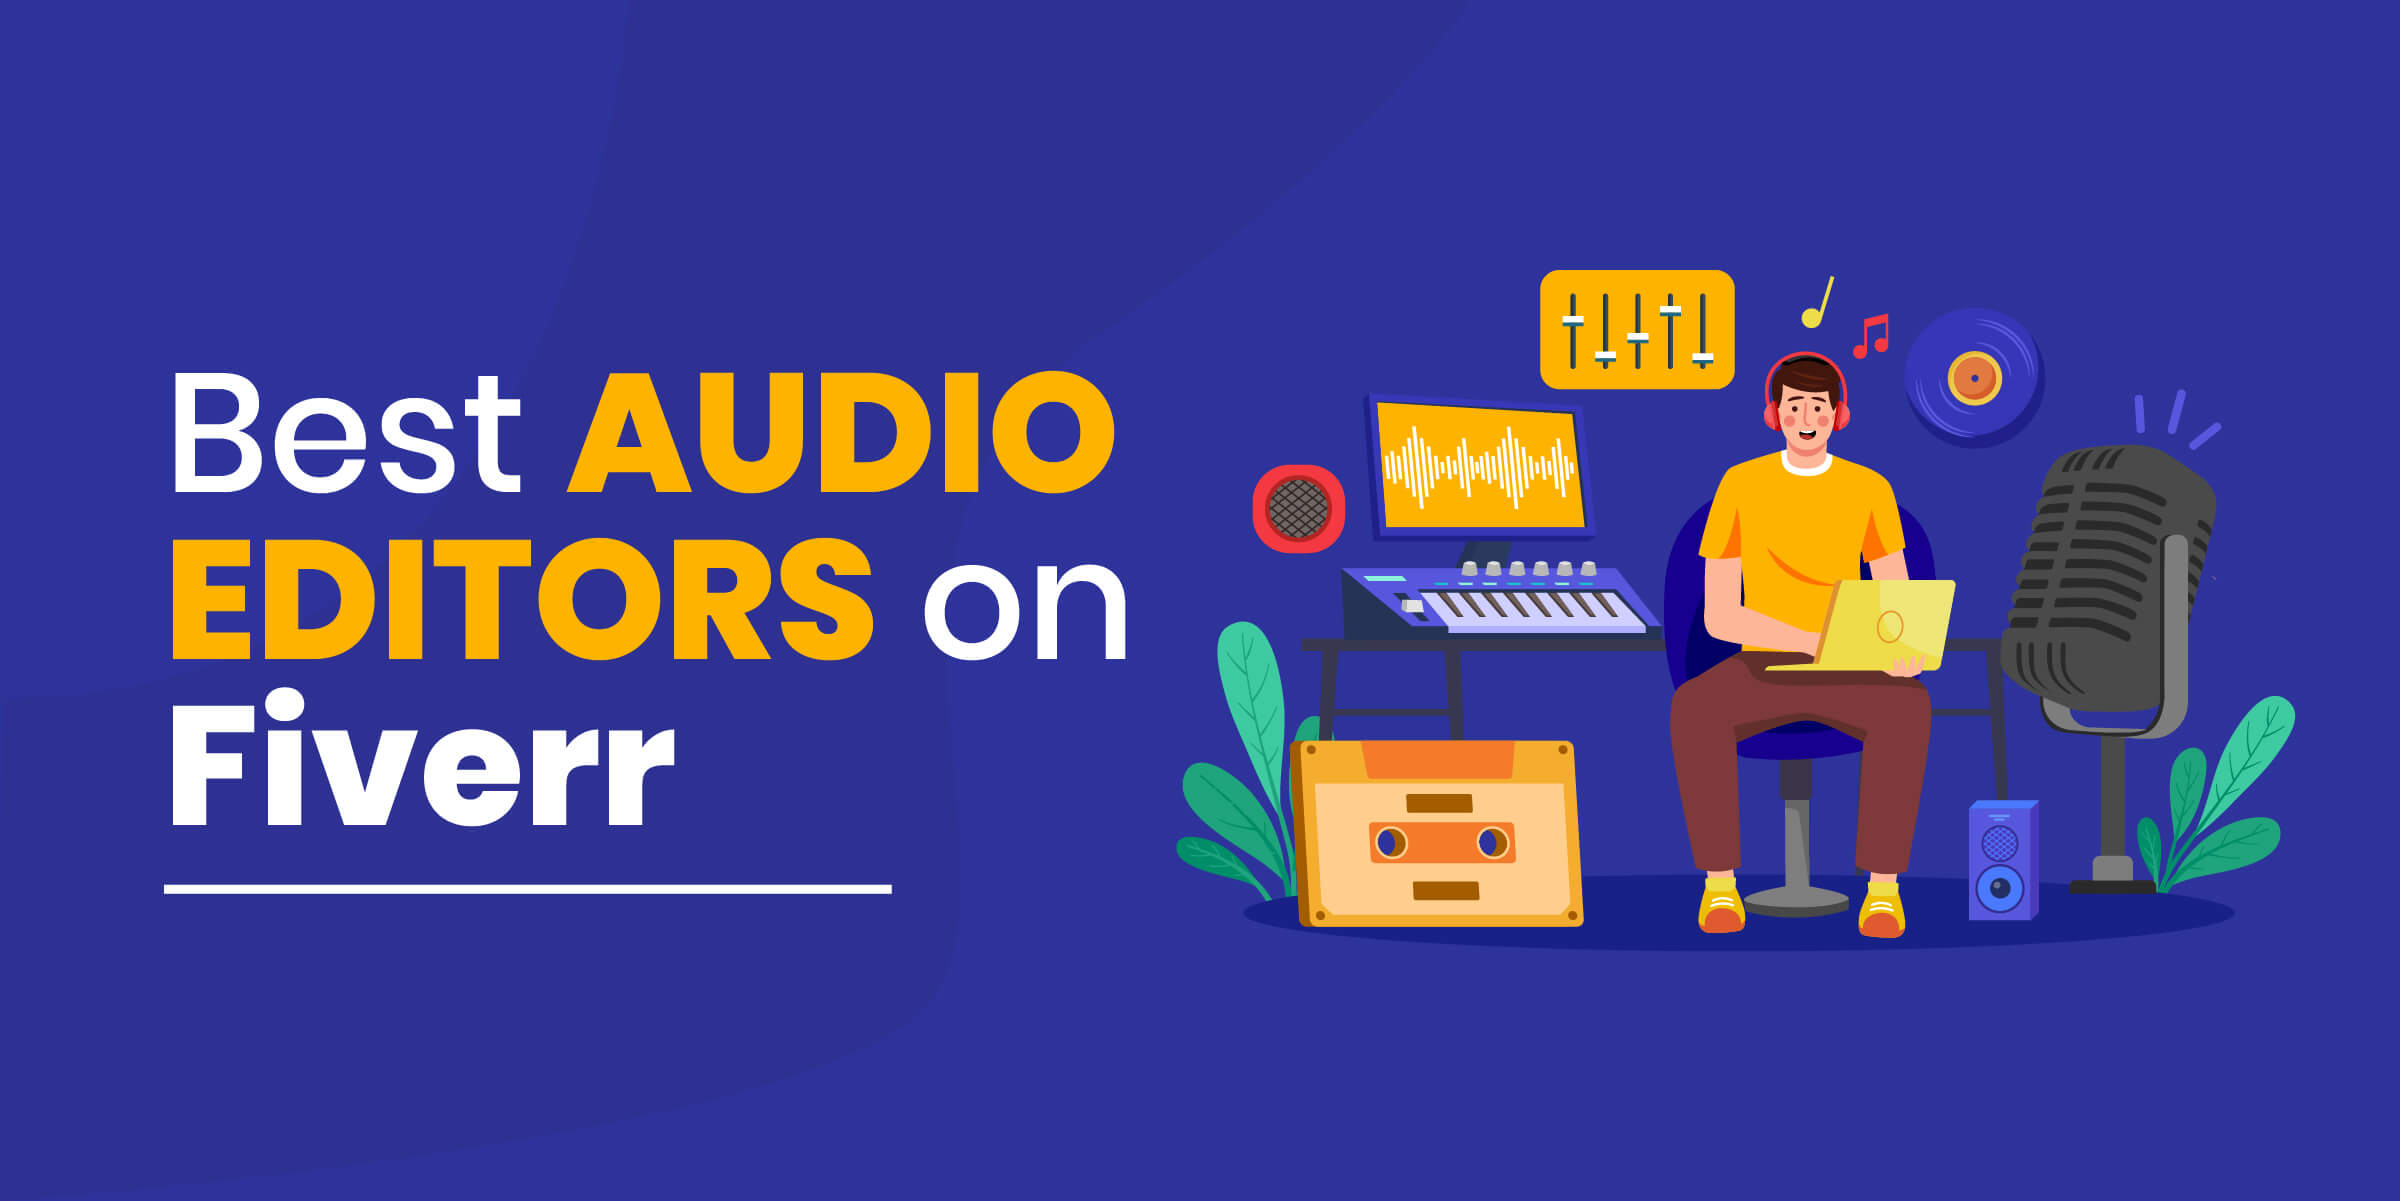 Best Audio Editors on Fiverr